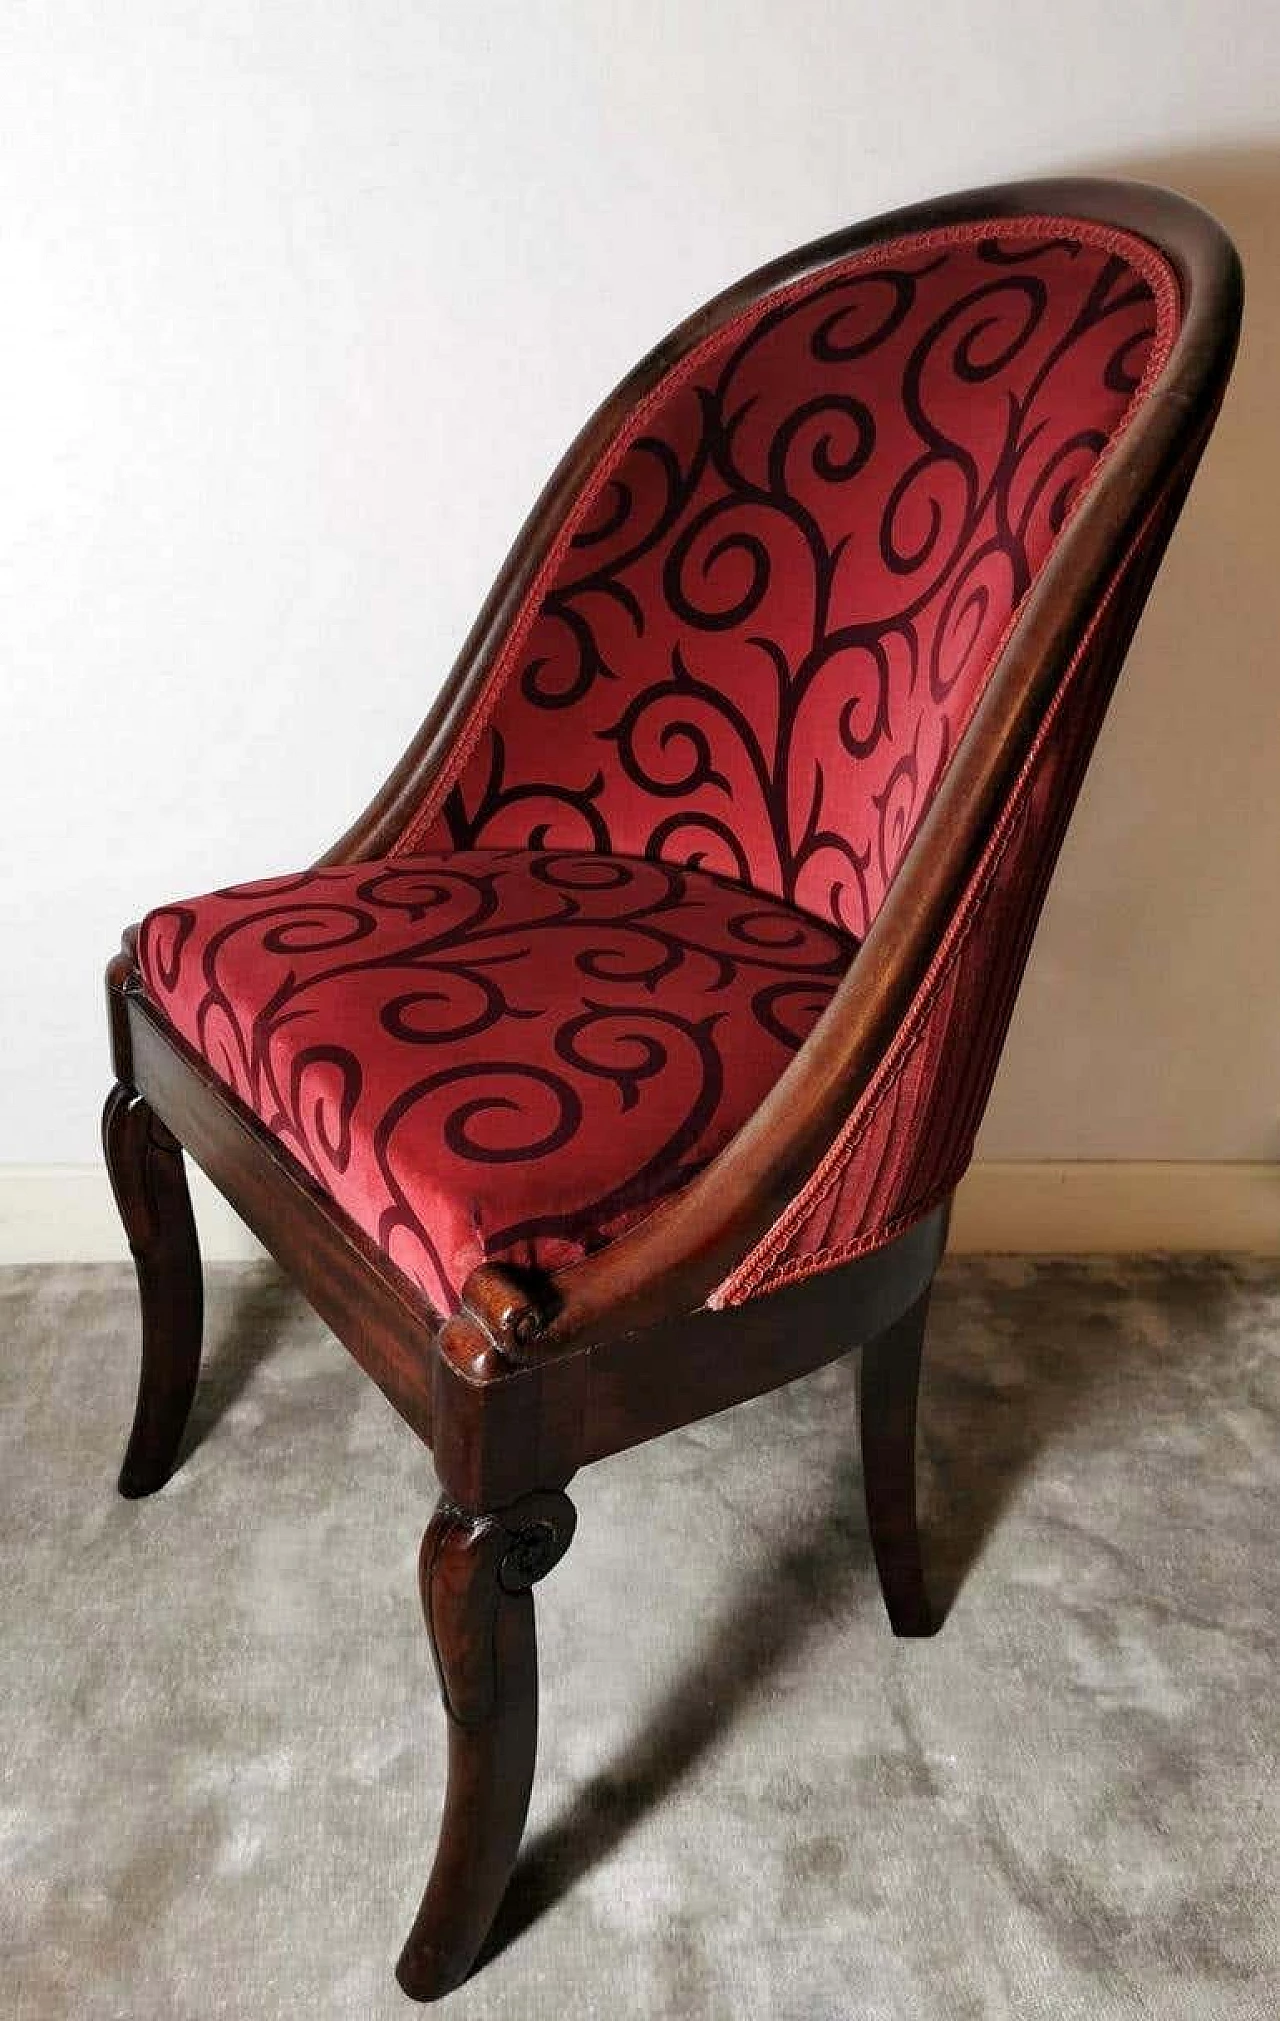 Late Empire cockpit chair in mahogany and Dedar velvet, 19th century 1252115